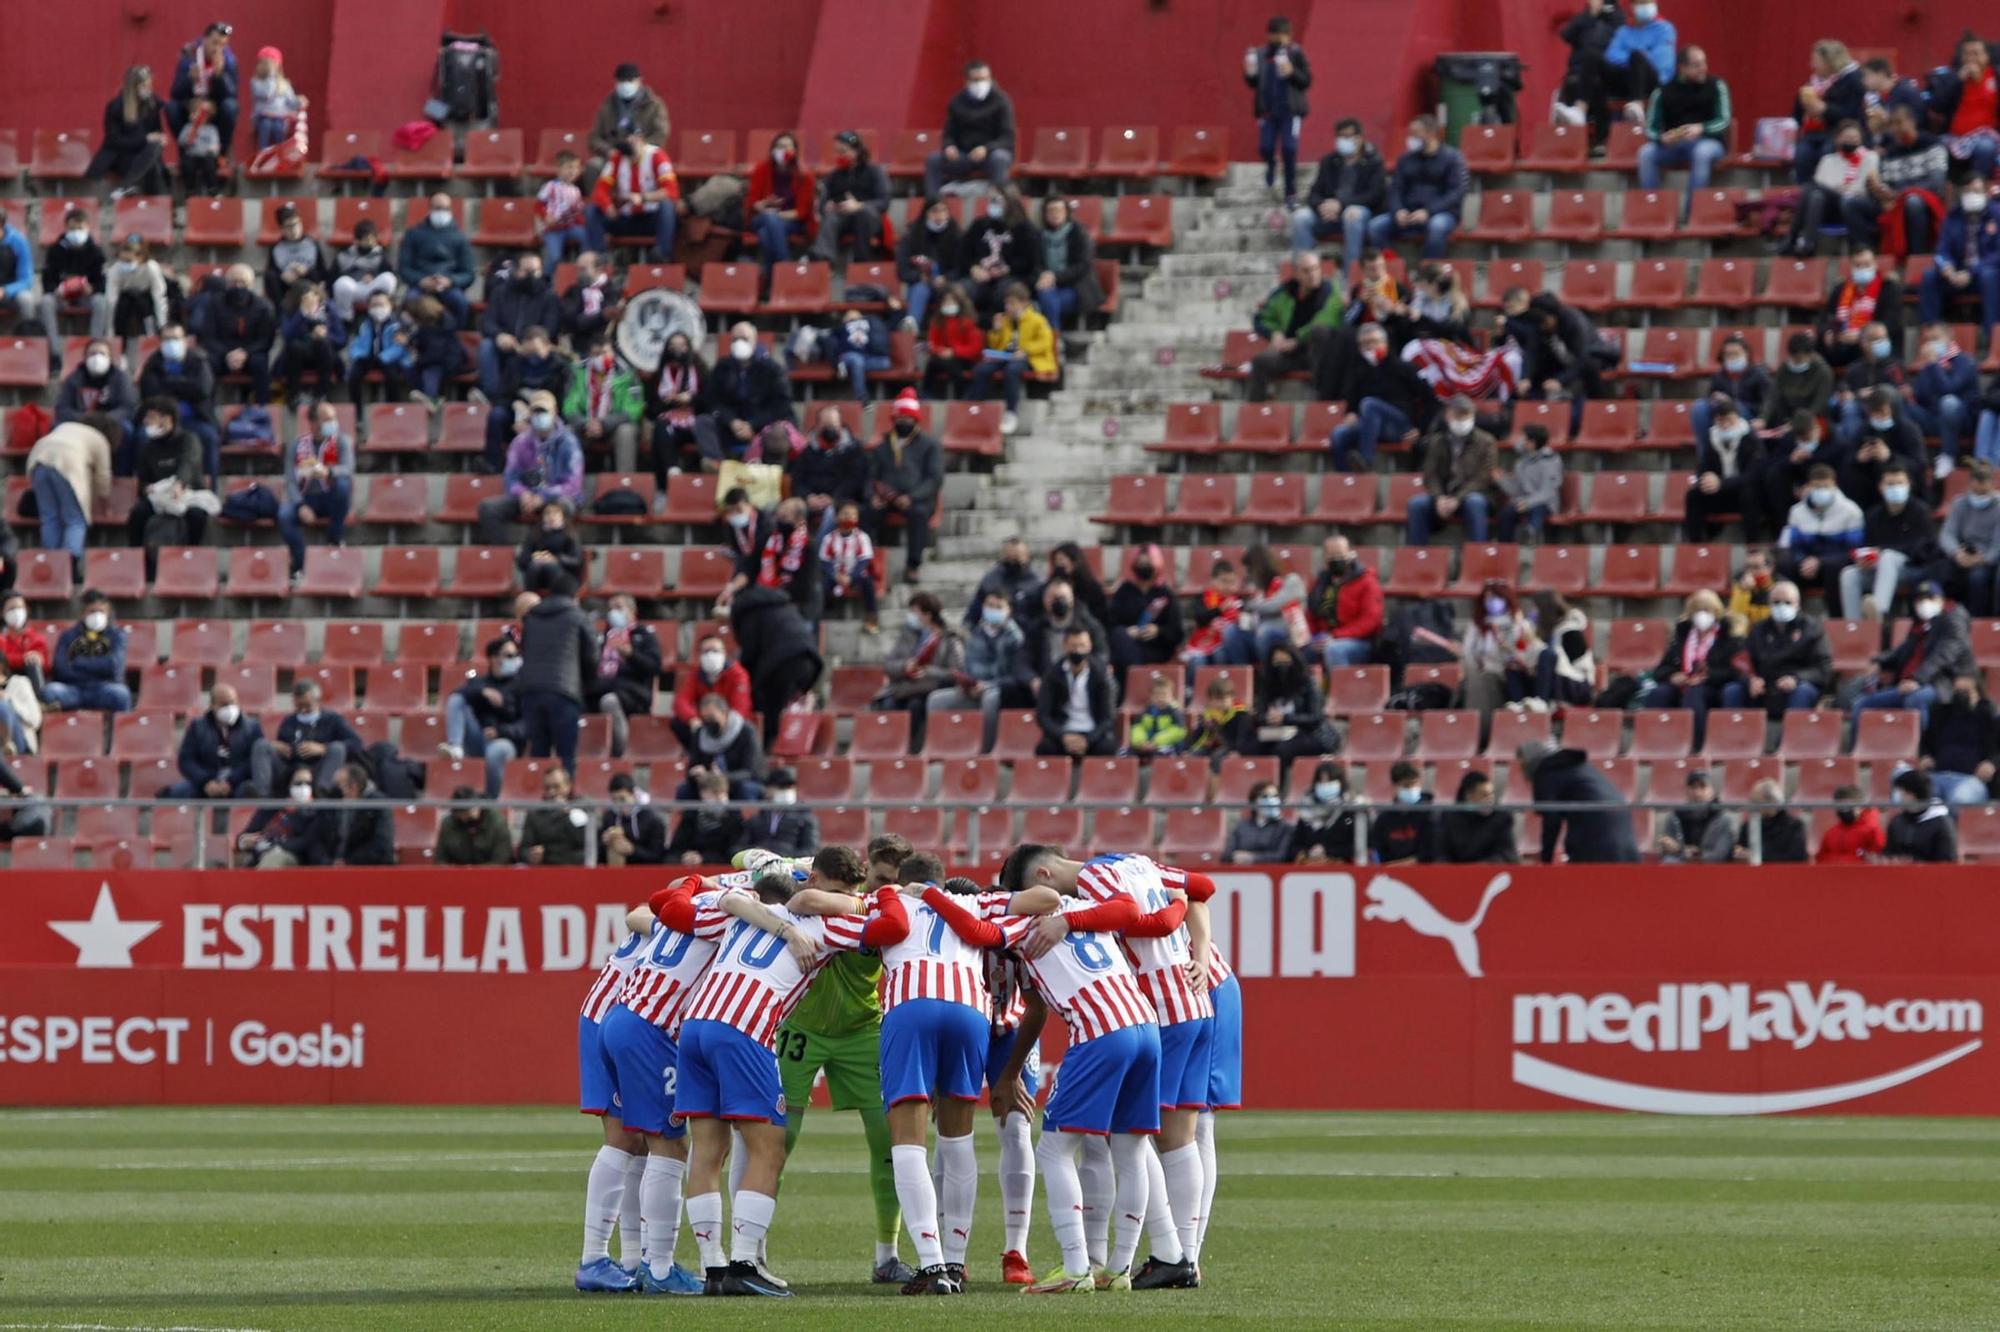 Girona 2-1 Fuenlabrada: La fantasia impulsa el Girona